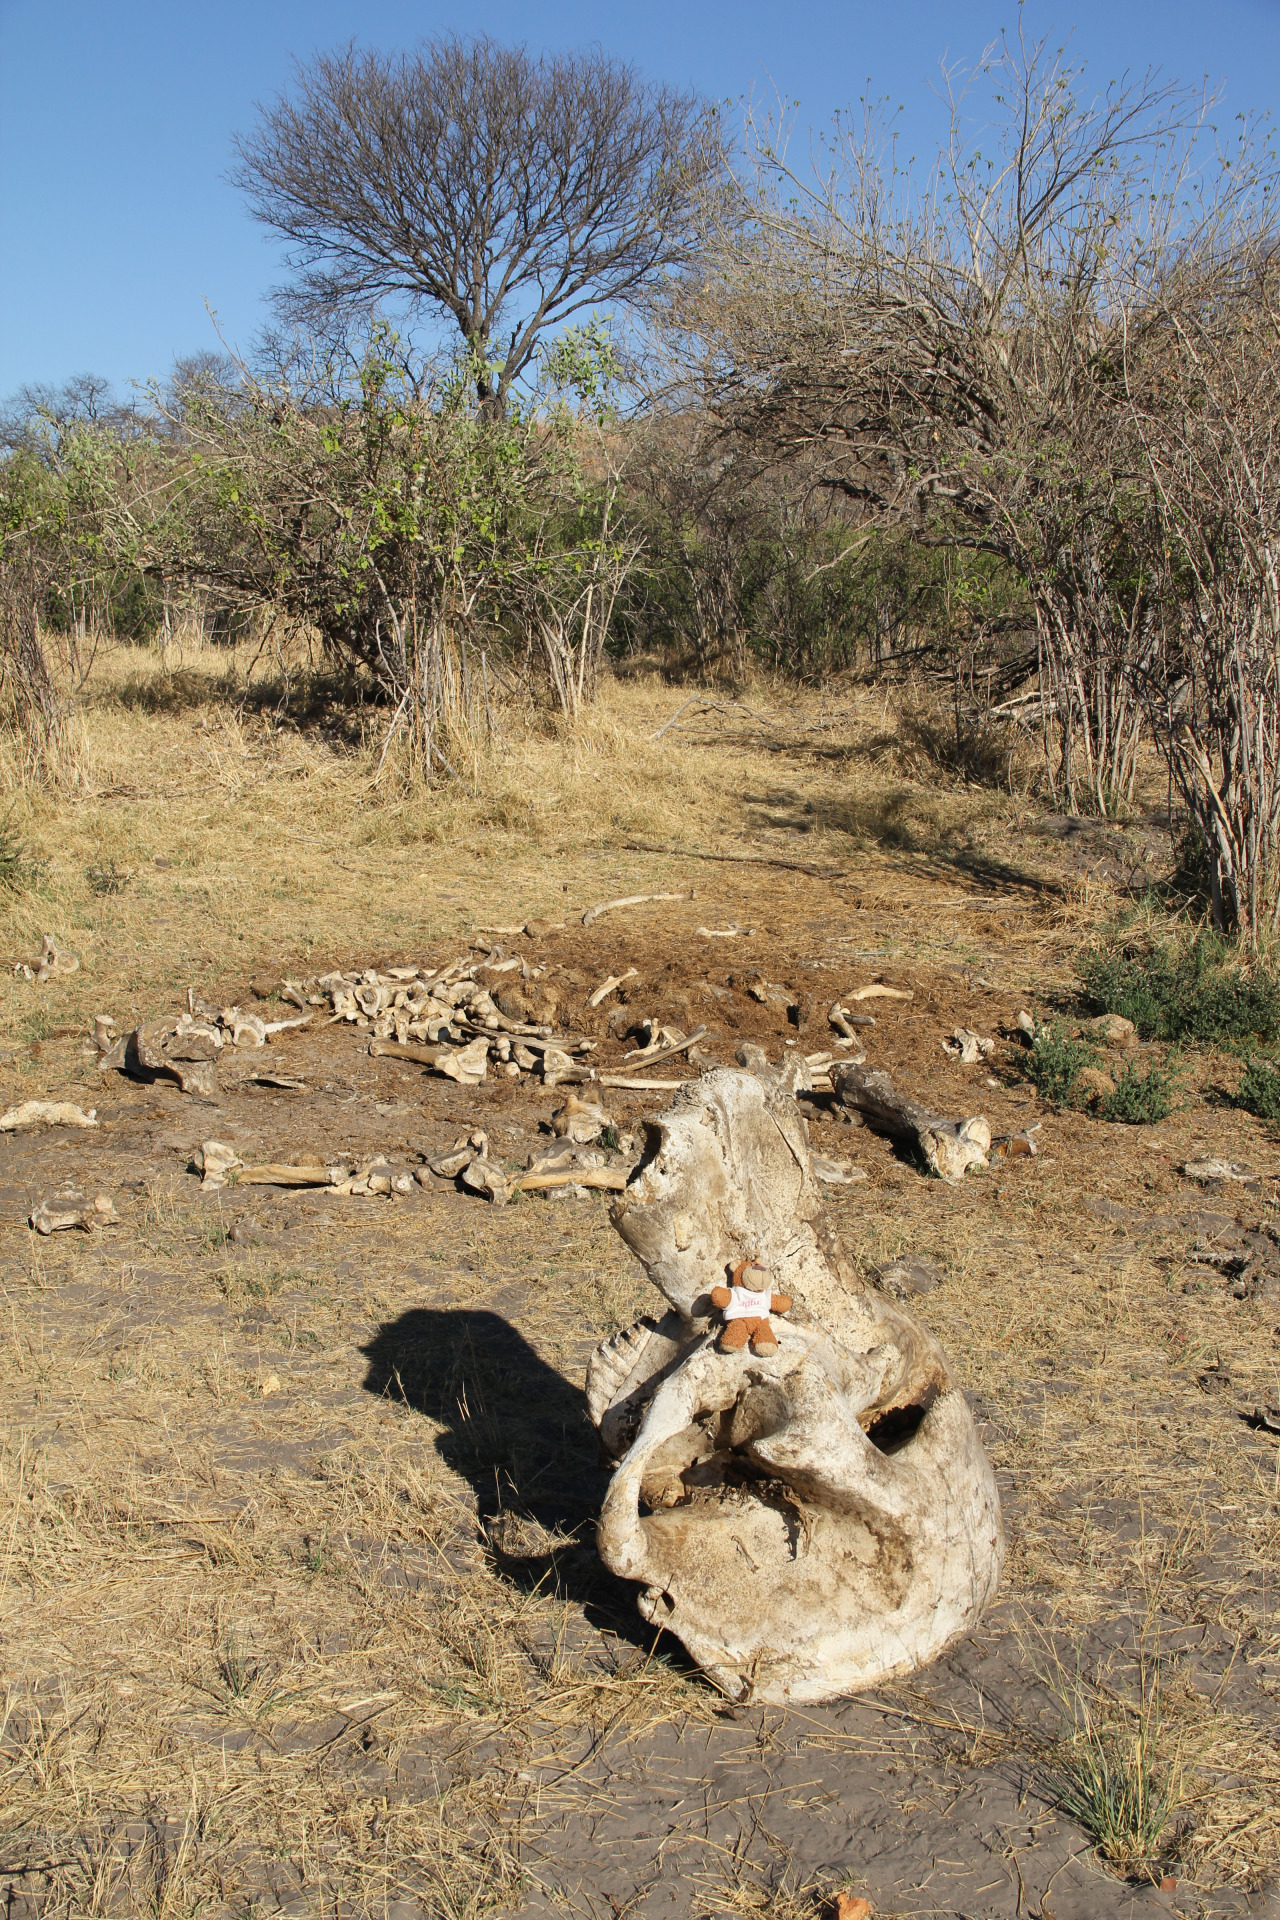 Bearaptu ate everything except these few bones in Chobe National Park , Botswana.